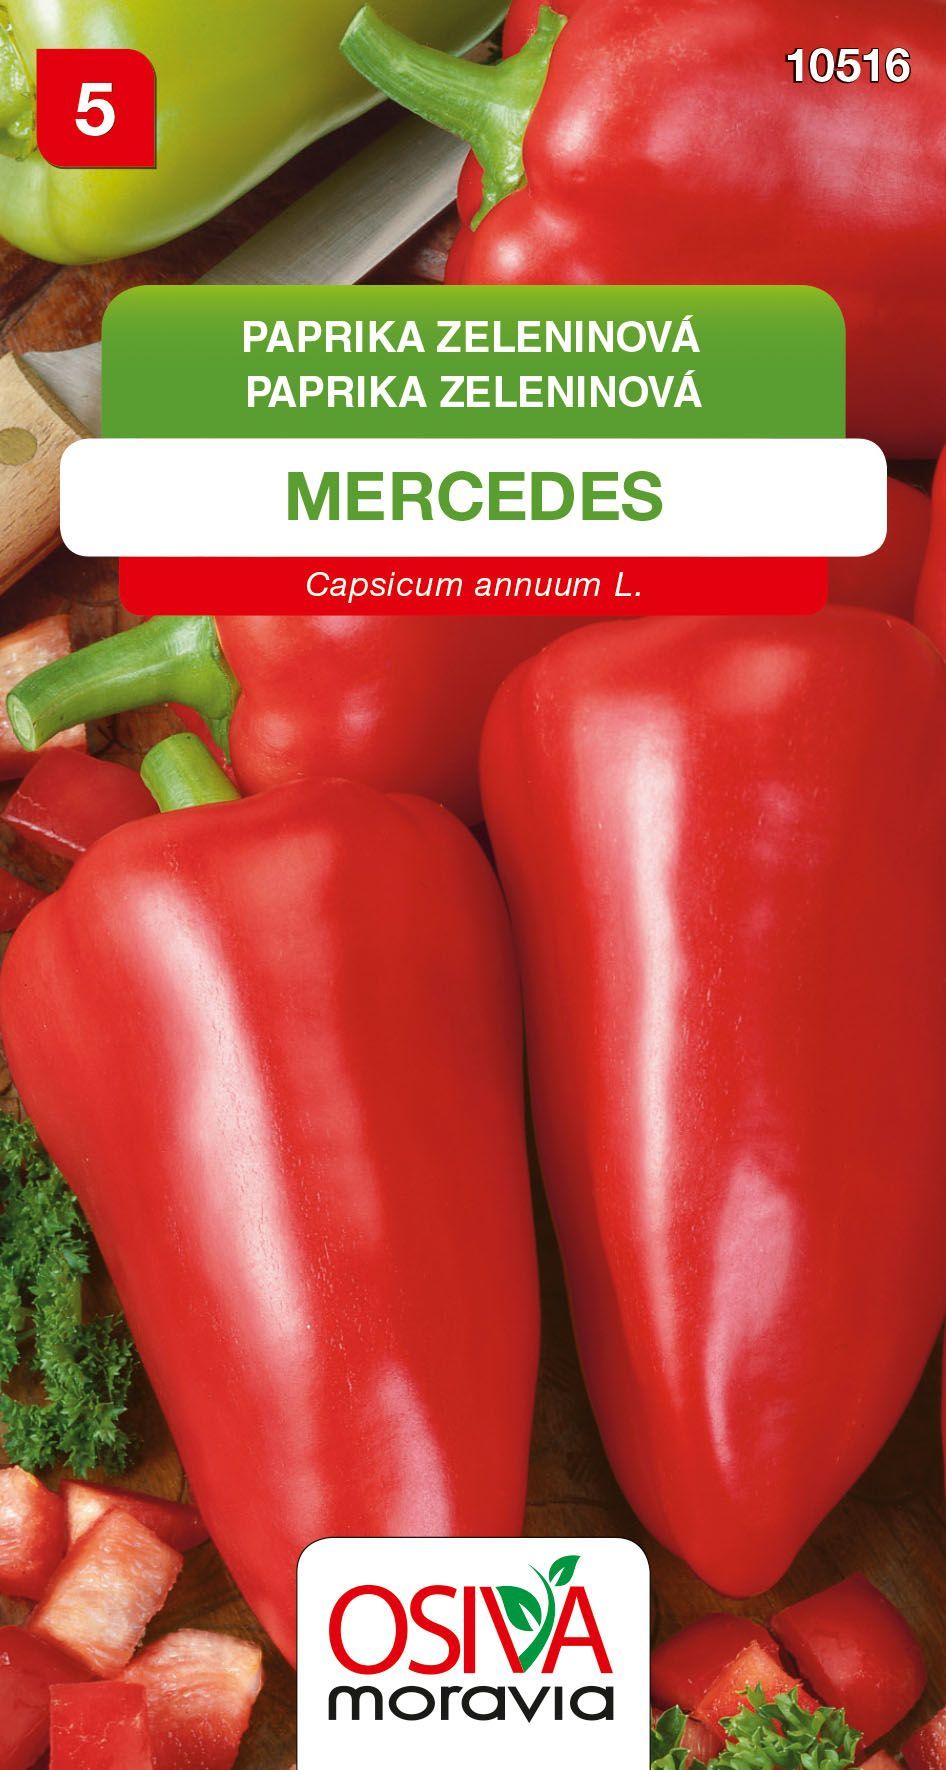 Paprika zeleninová - sladká - Mercedes